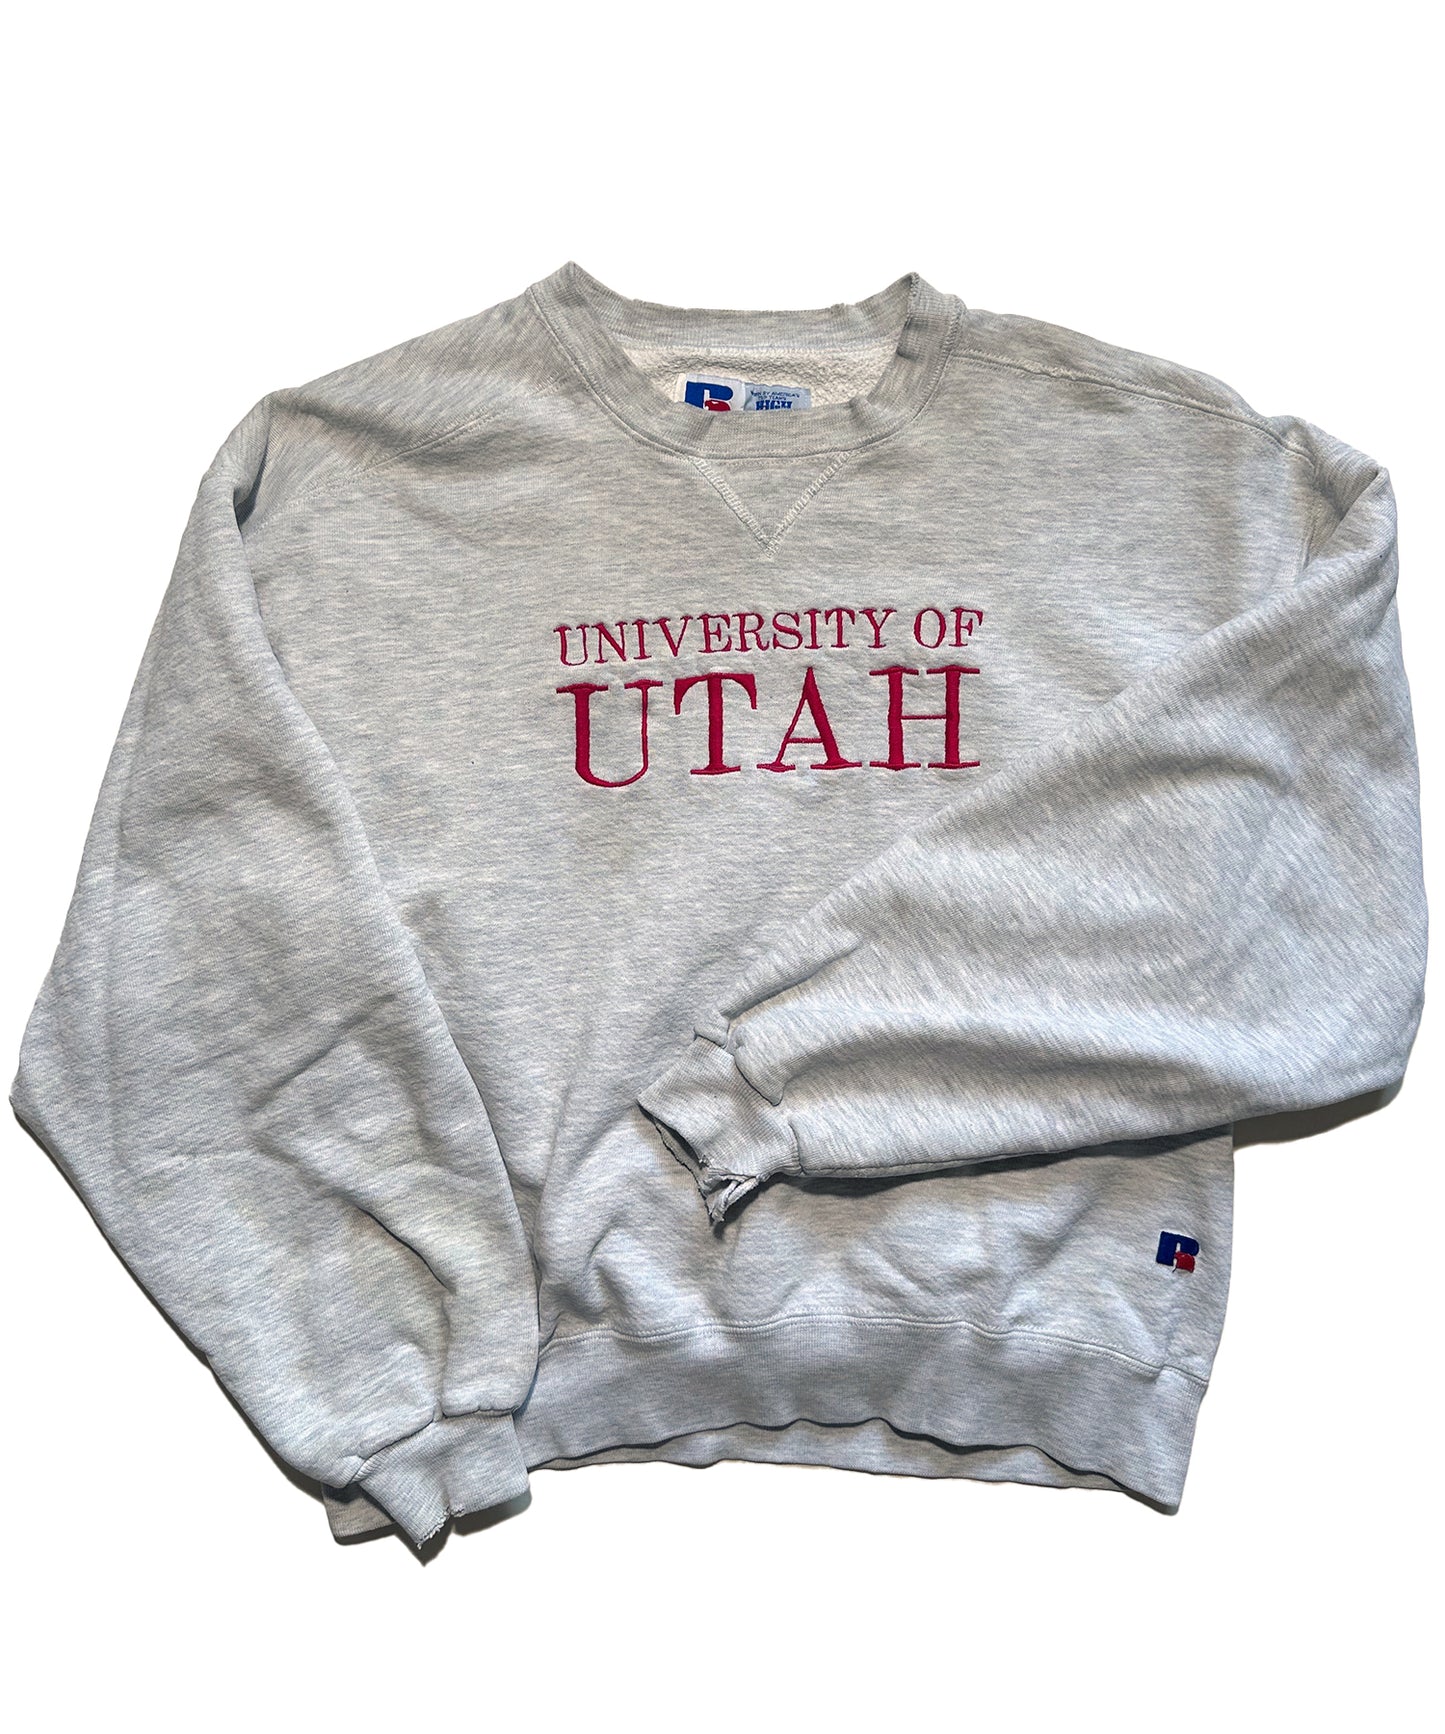 Vintage University of Utah Sweater (Medium)